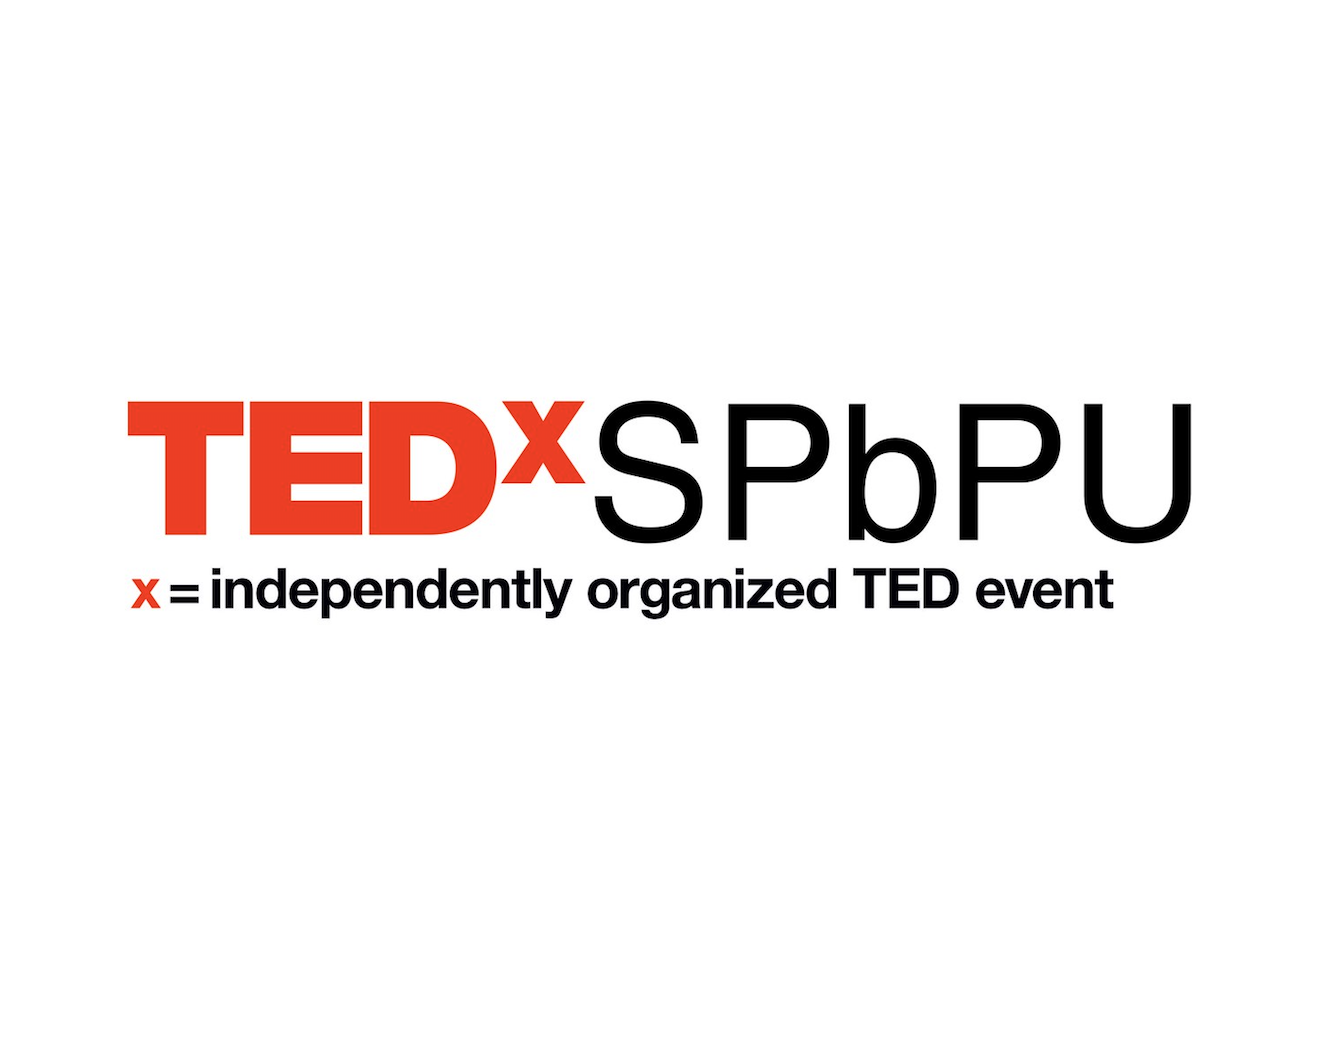 TEDxSPbPU